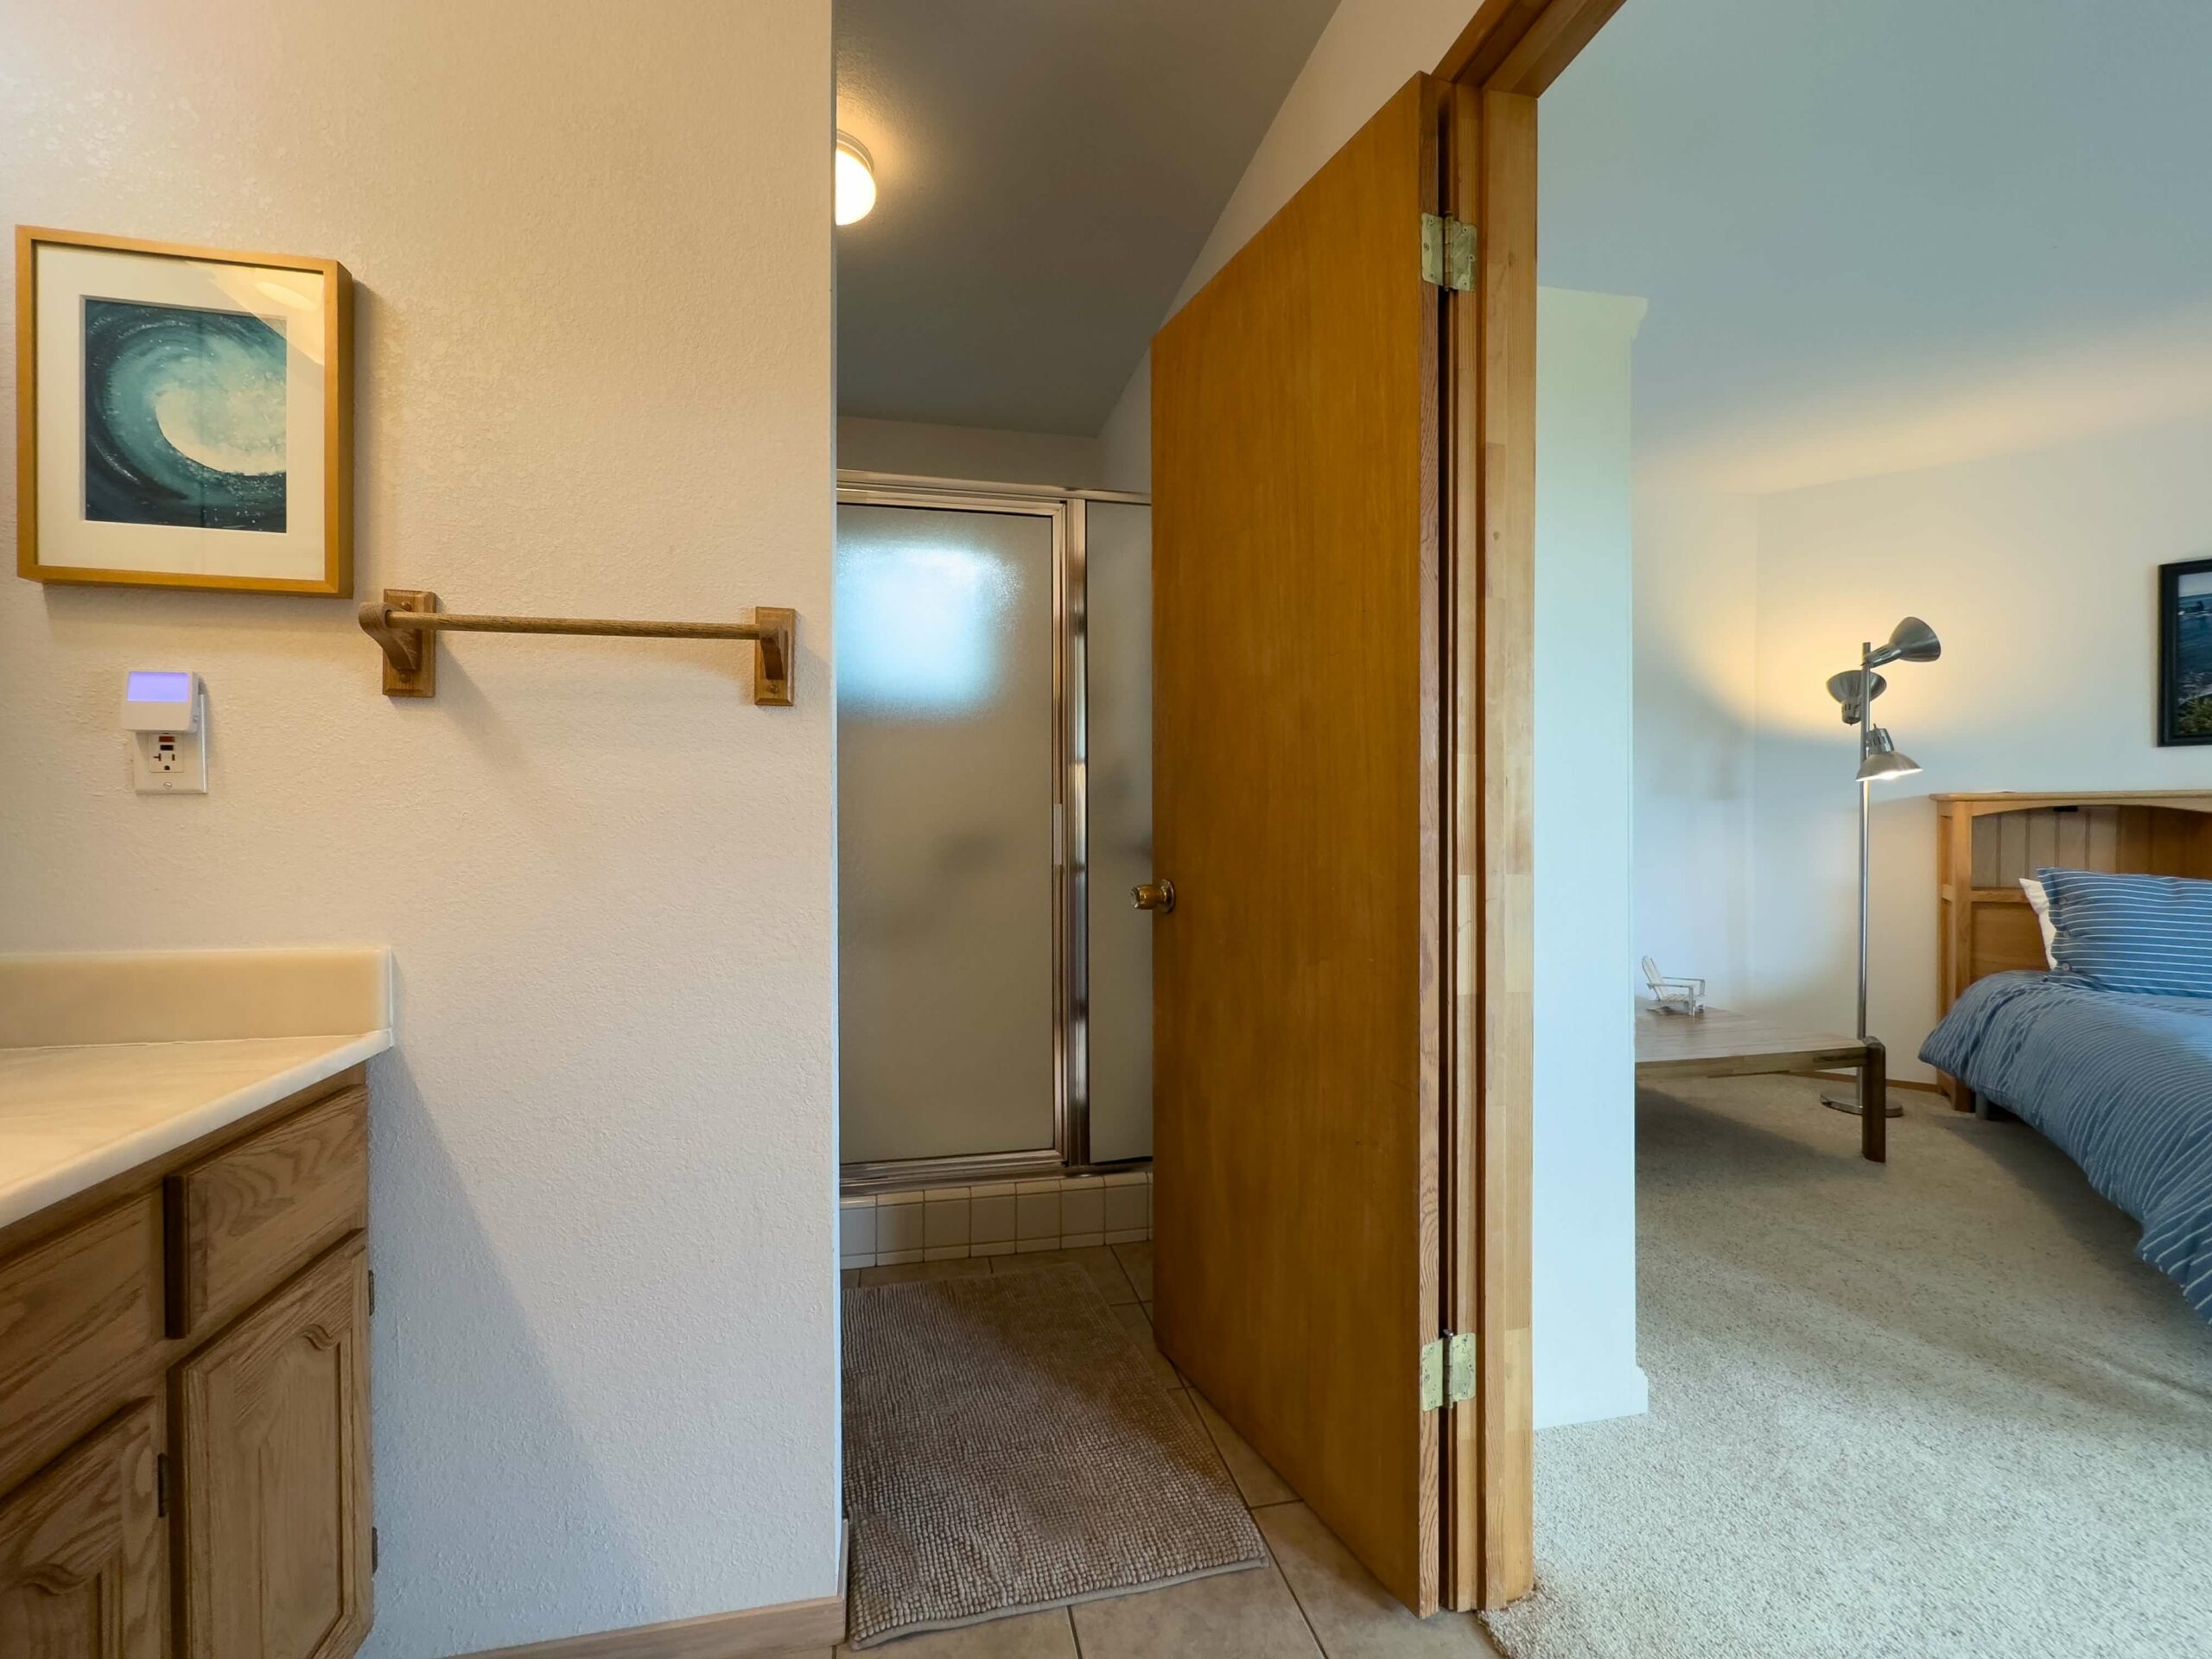 Mare Vista: view into bathroom & shower from bedroom